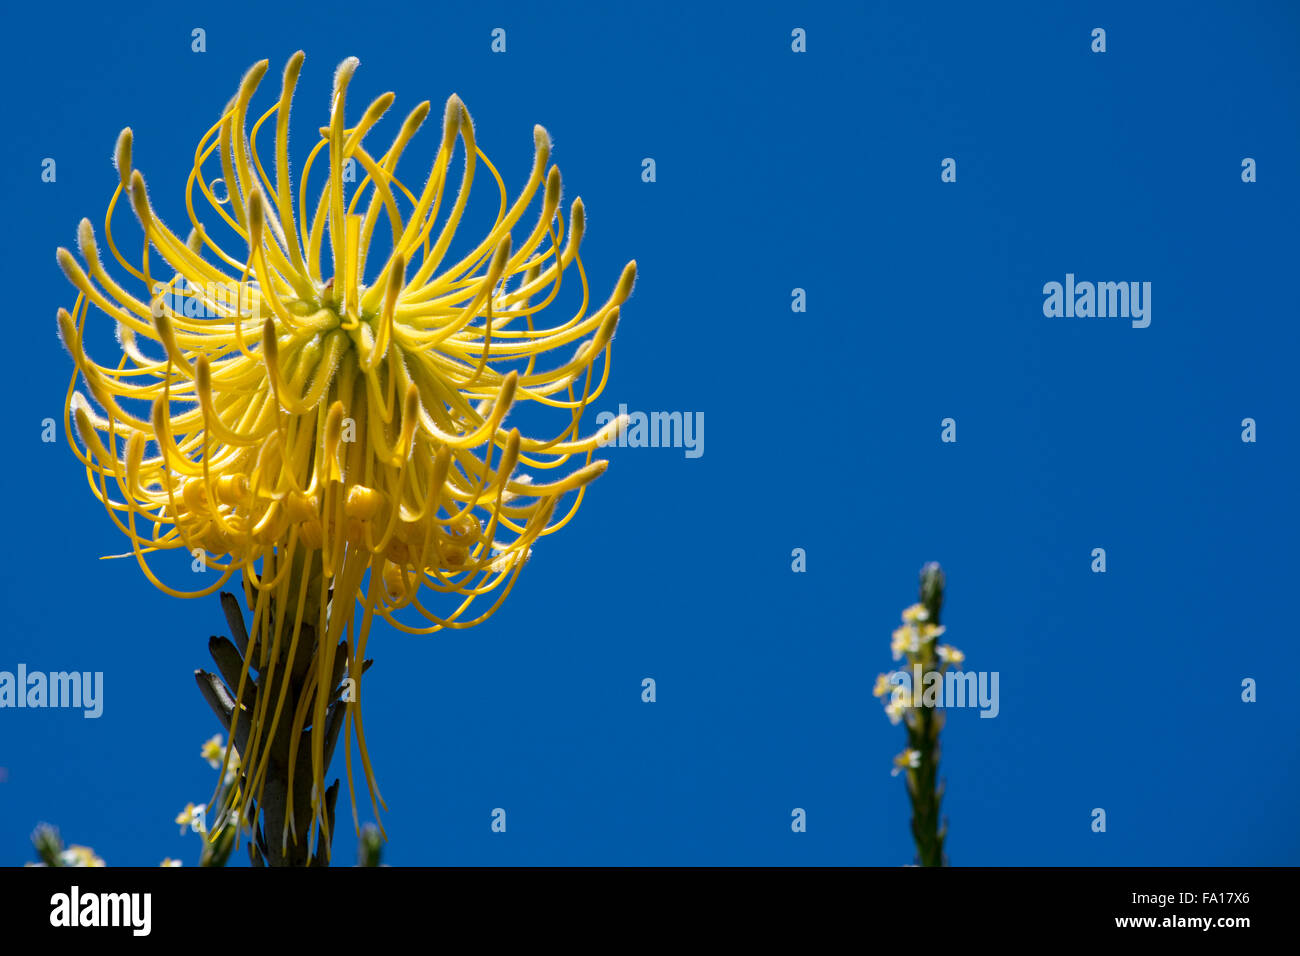 South Africa, Cape Town. Kirstenbosch Garden. Yellow upside-down protea flowers, aka pincushion flowers. Stock Photo